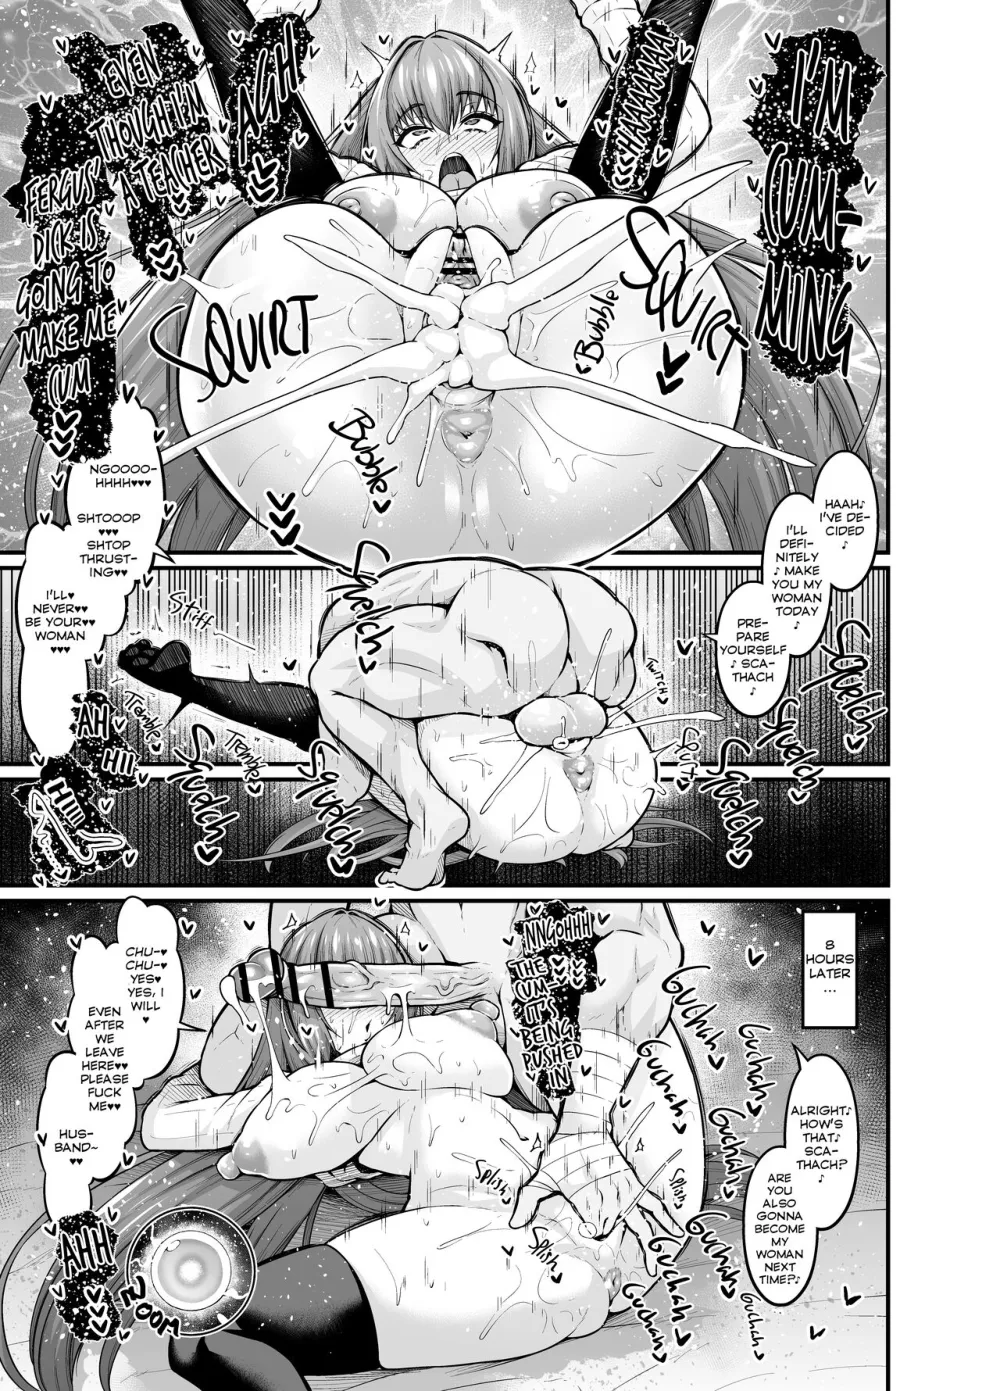 Skathach vs Fergus - InglÃ©s Hentai Manga (PÃ¡gina 5)